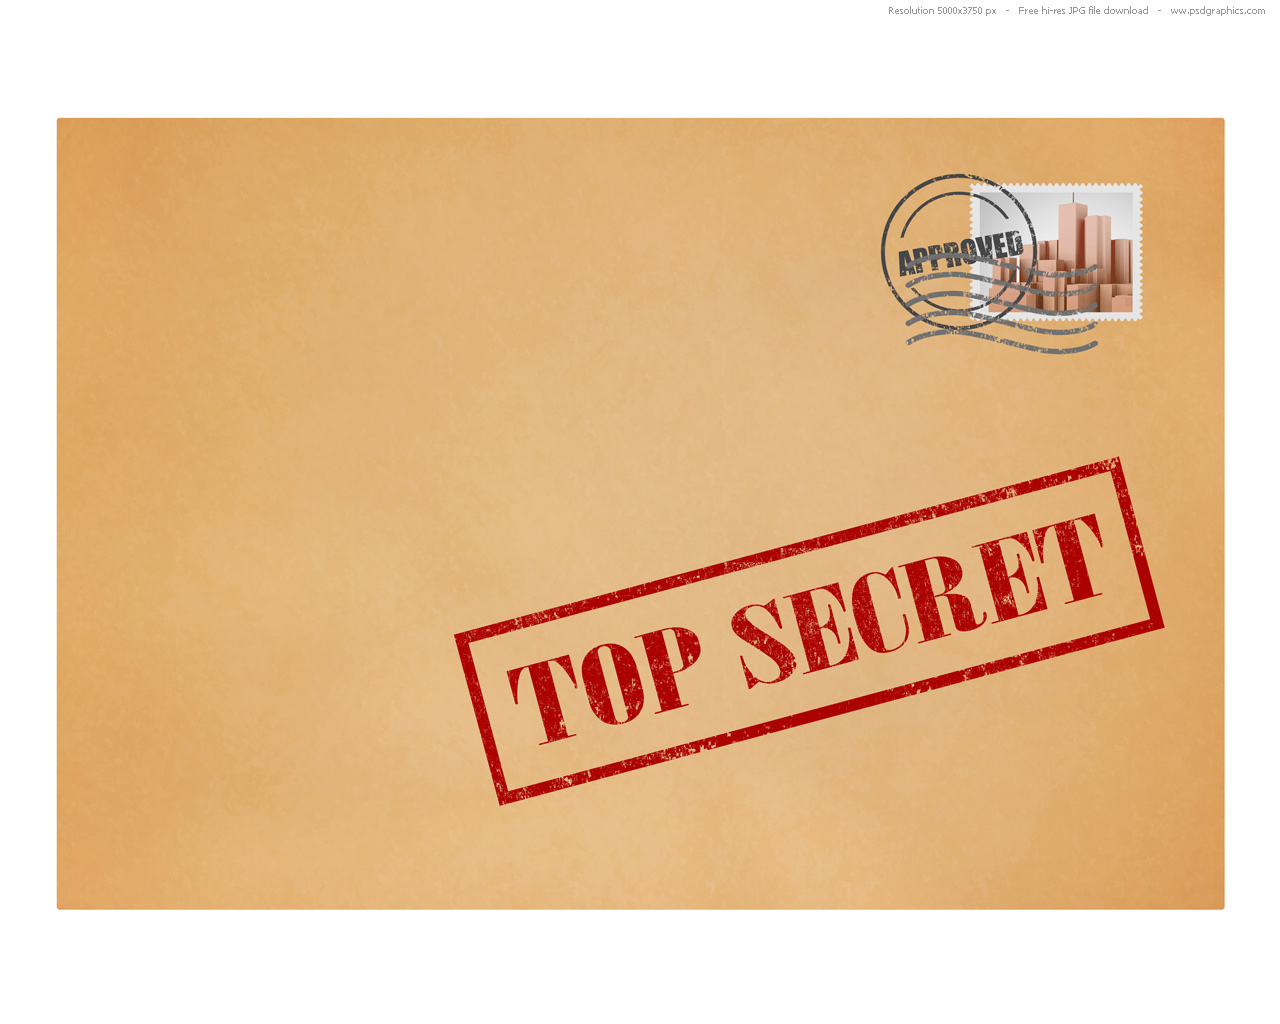 Top secret stamp and envelope PSDGraphics 1280x1024